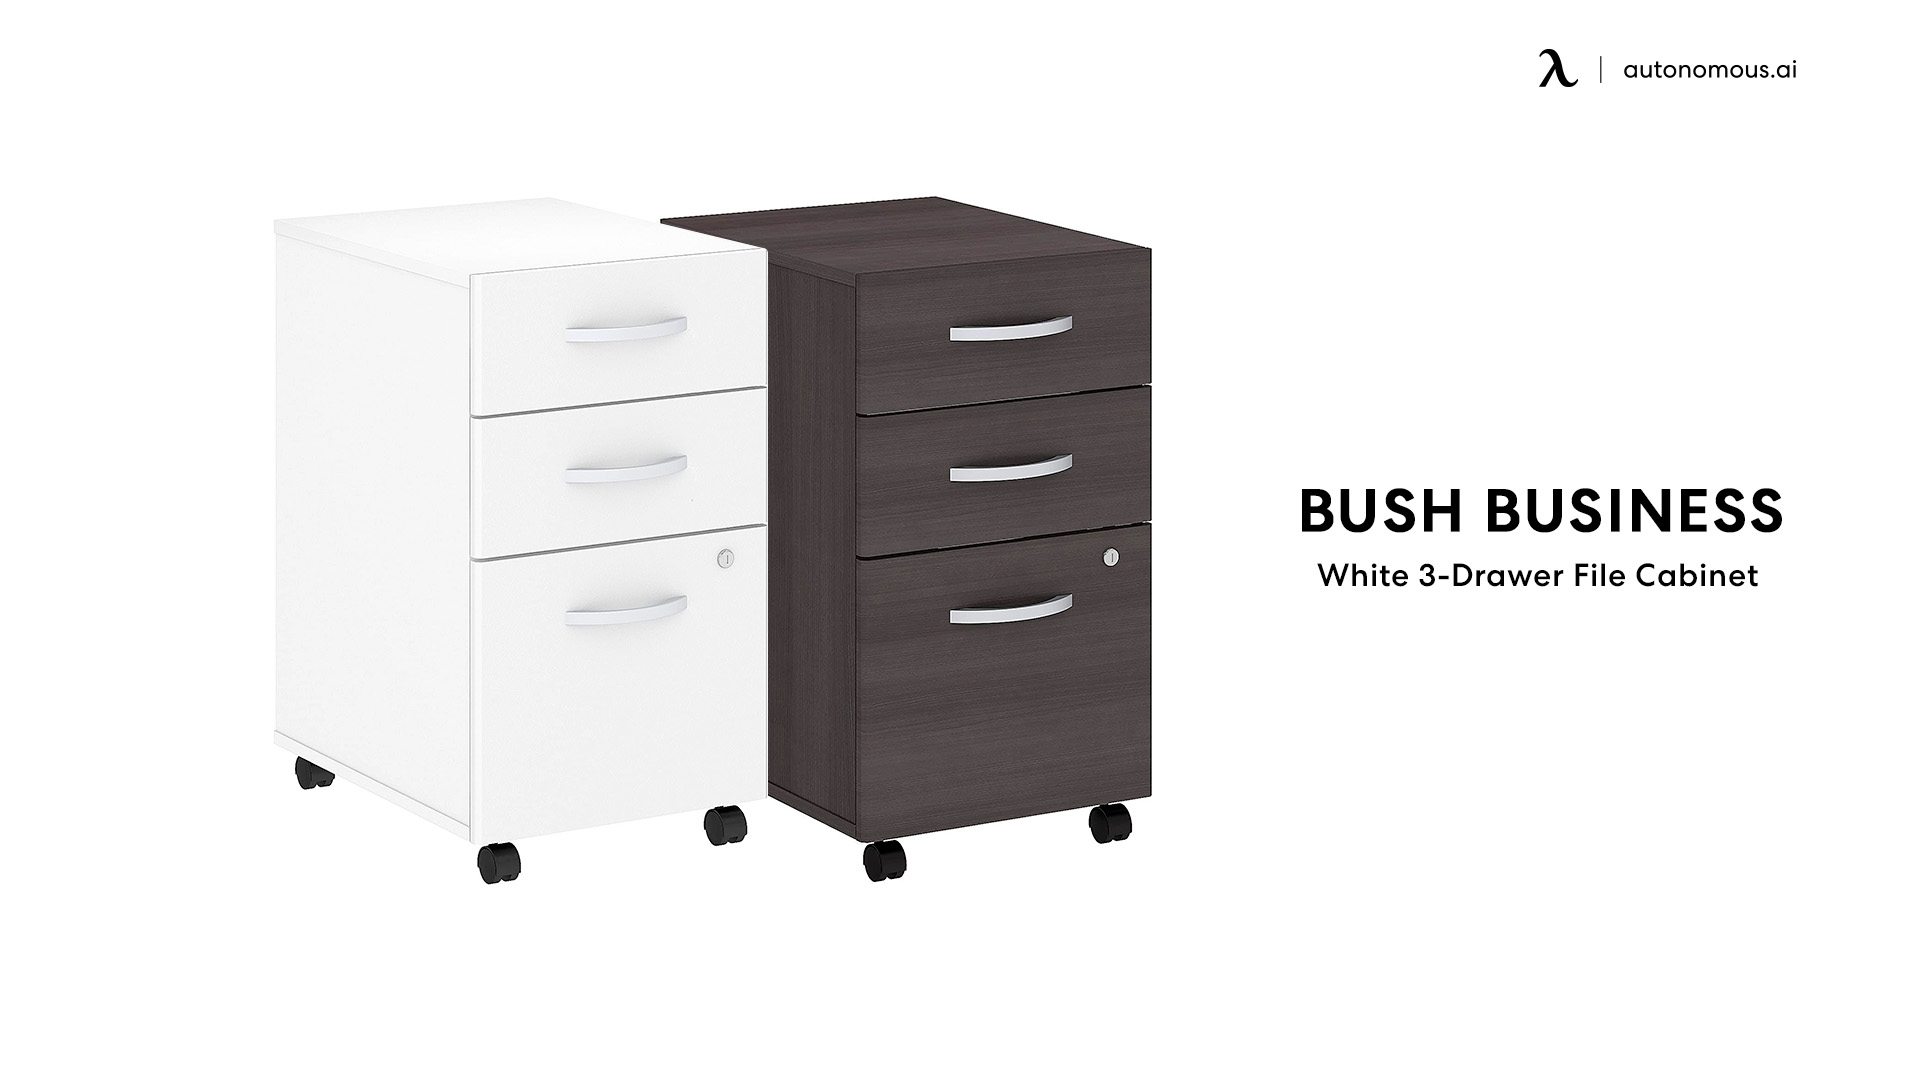 Bush Business White 3-Drawer File Cabinet